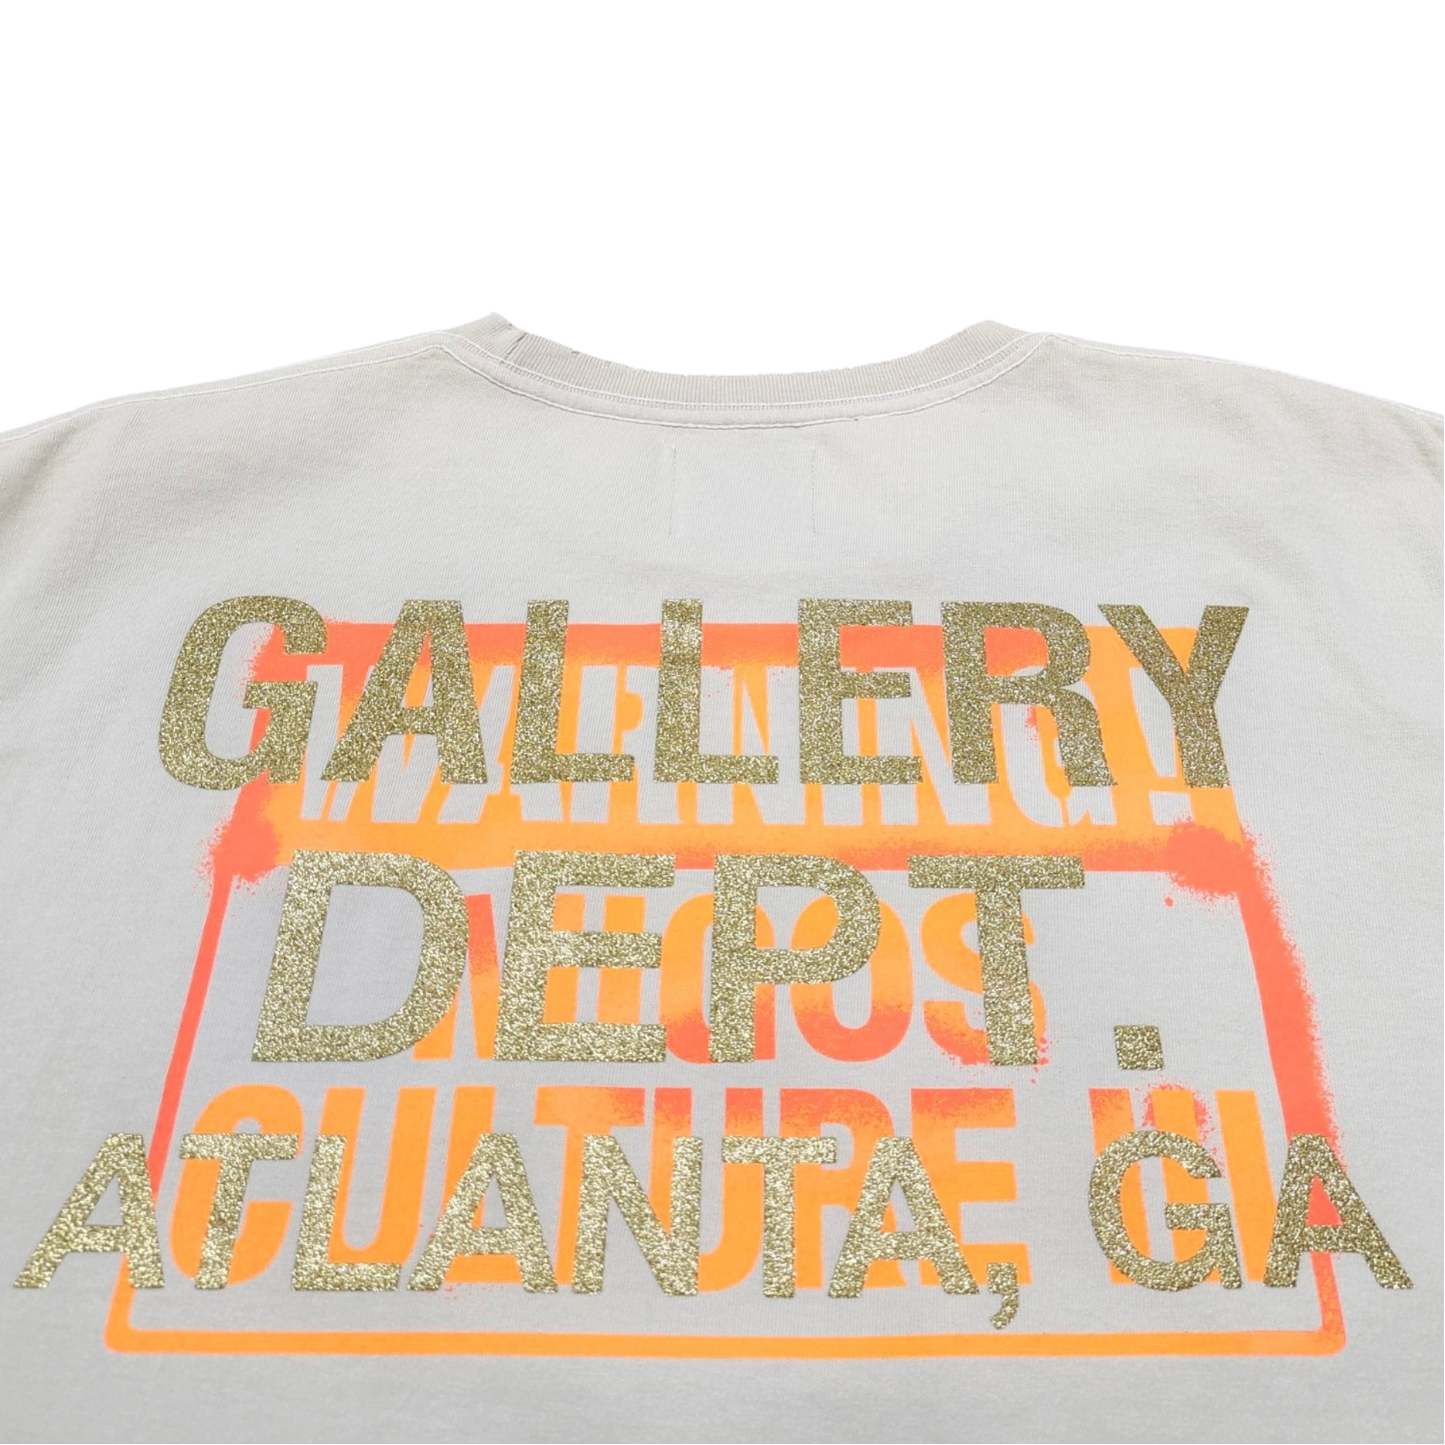 Migos x Gallery Dept. For Culture III